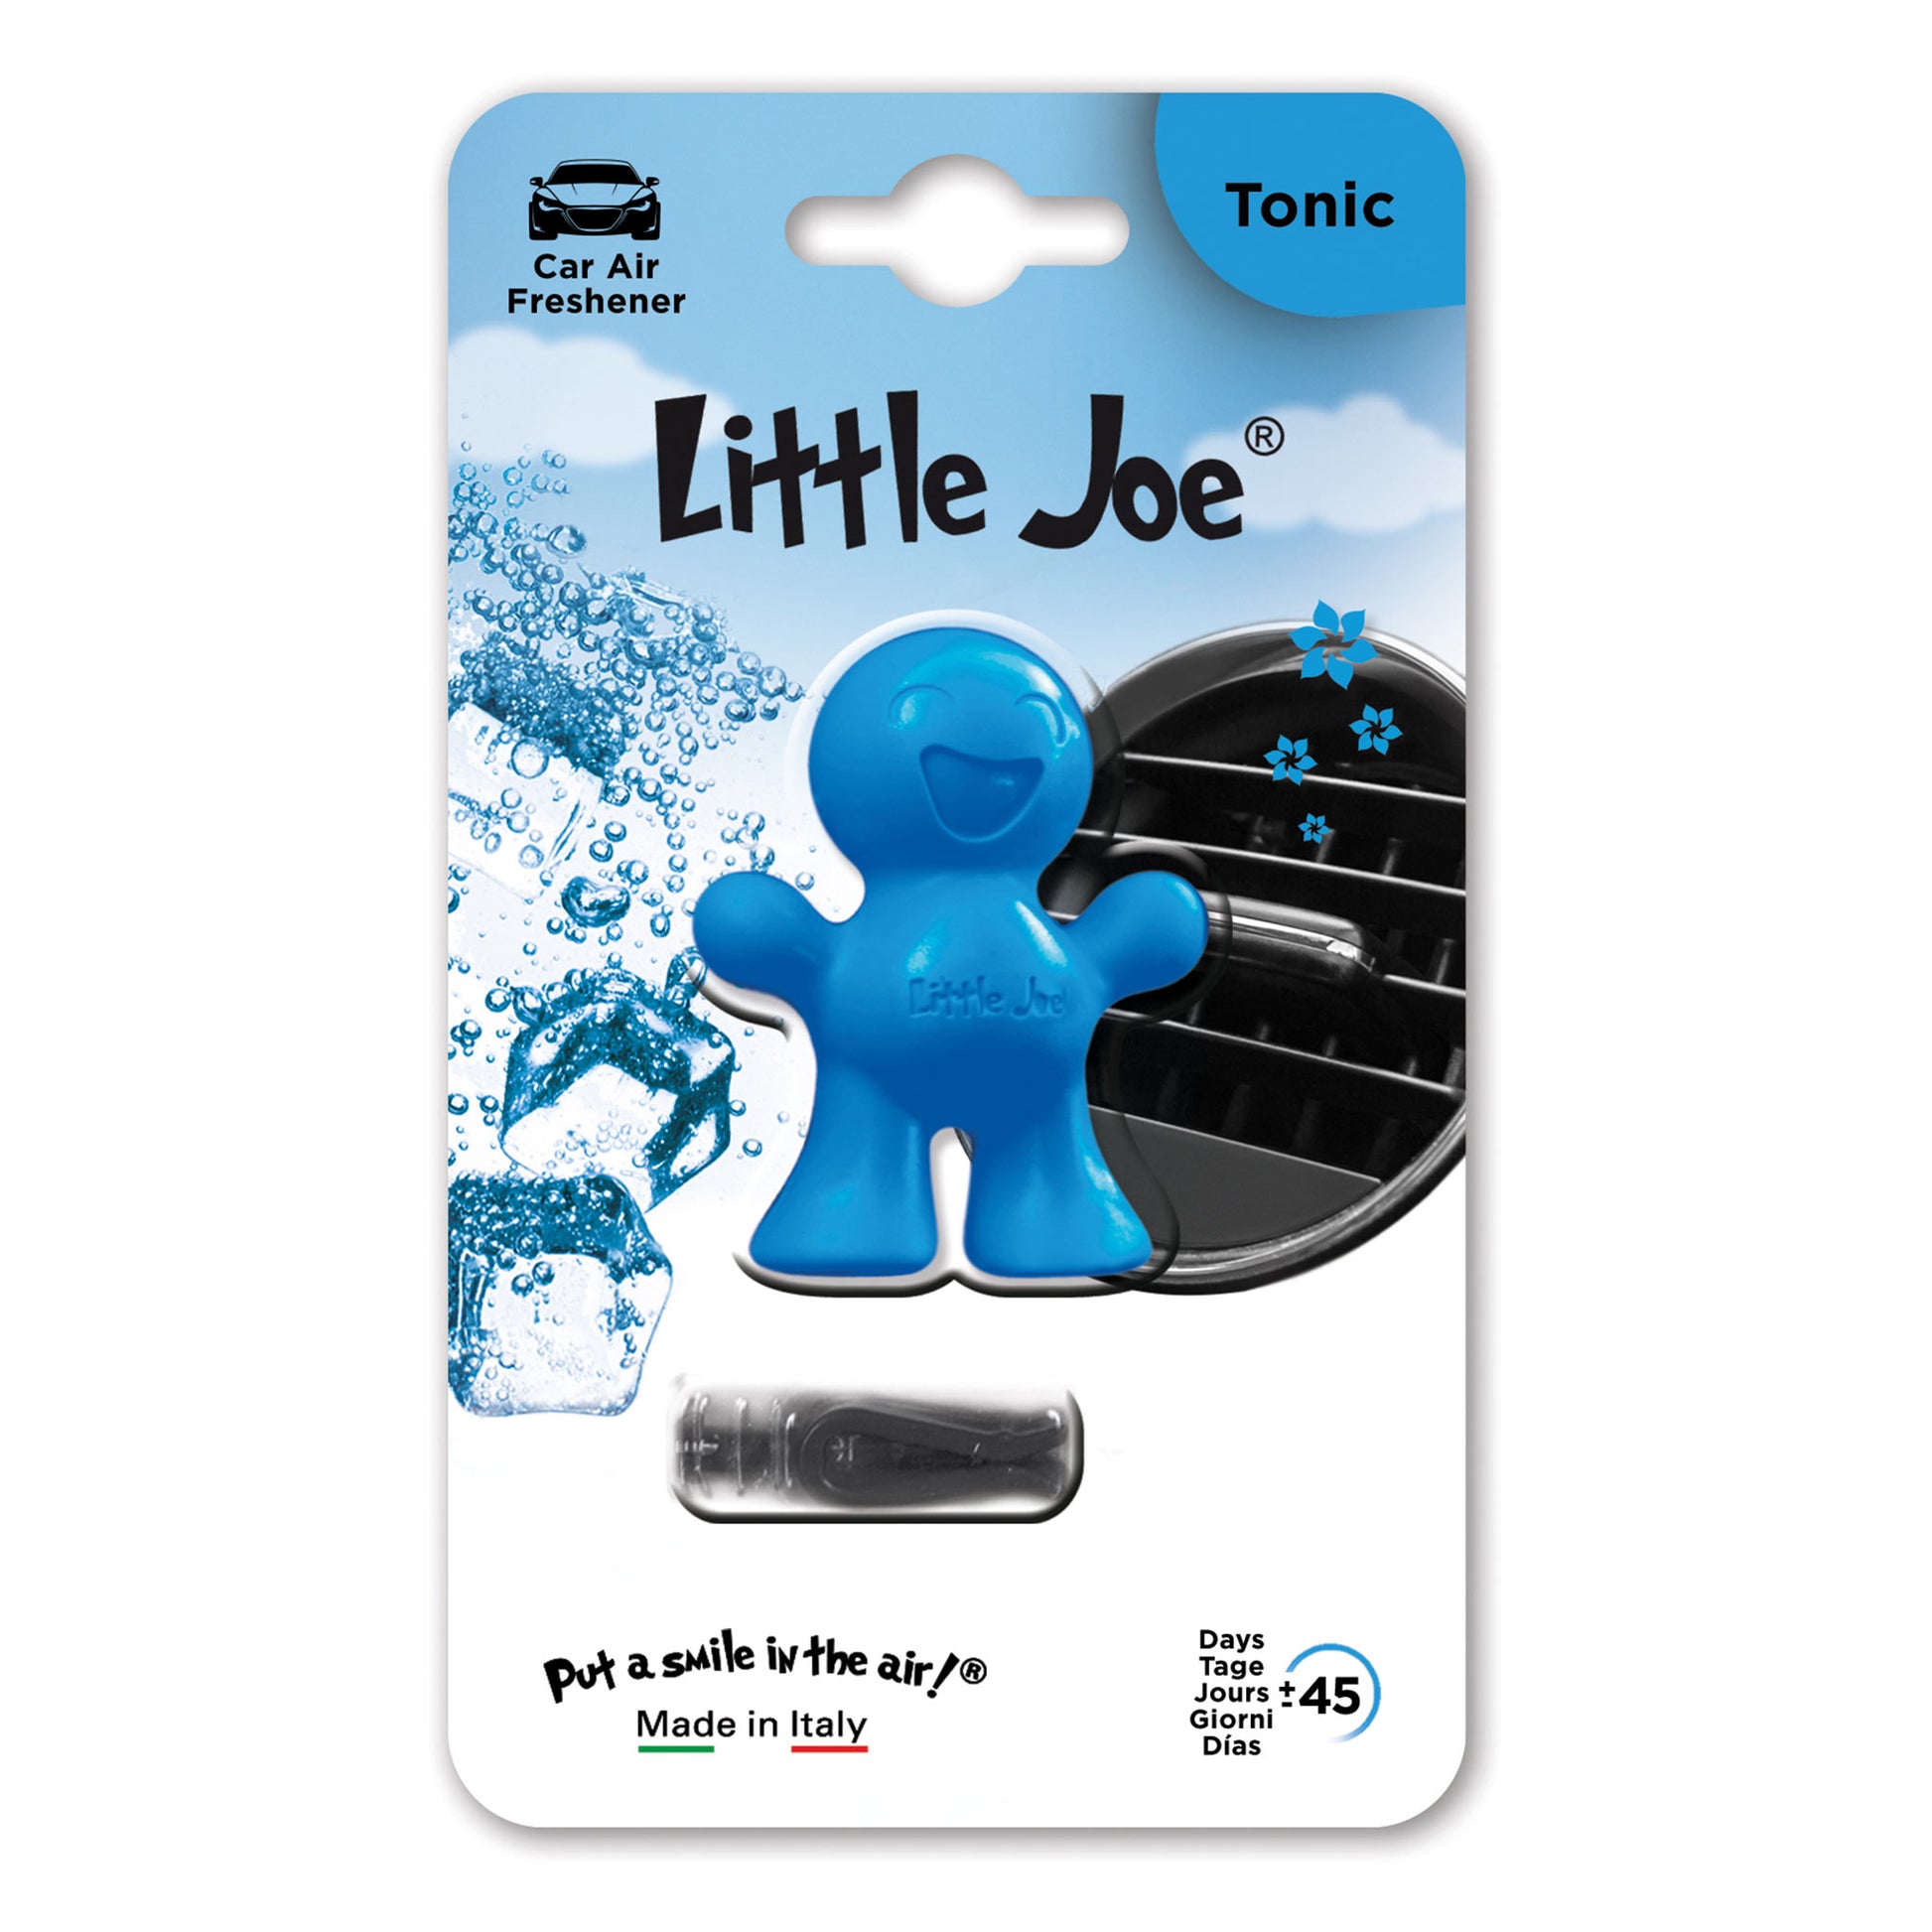 LITTLE JOE® LITTLE JOE 3D - NEW CAR